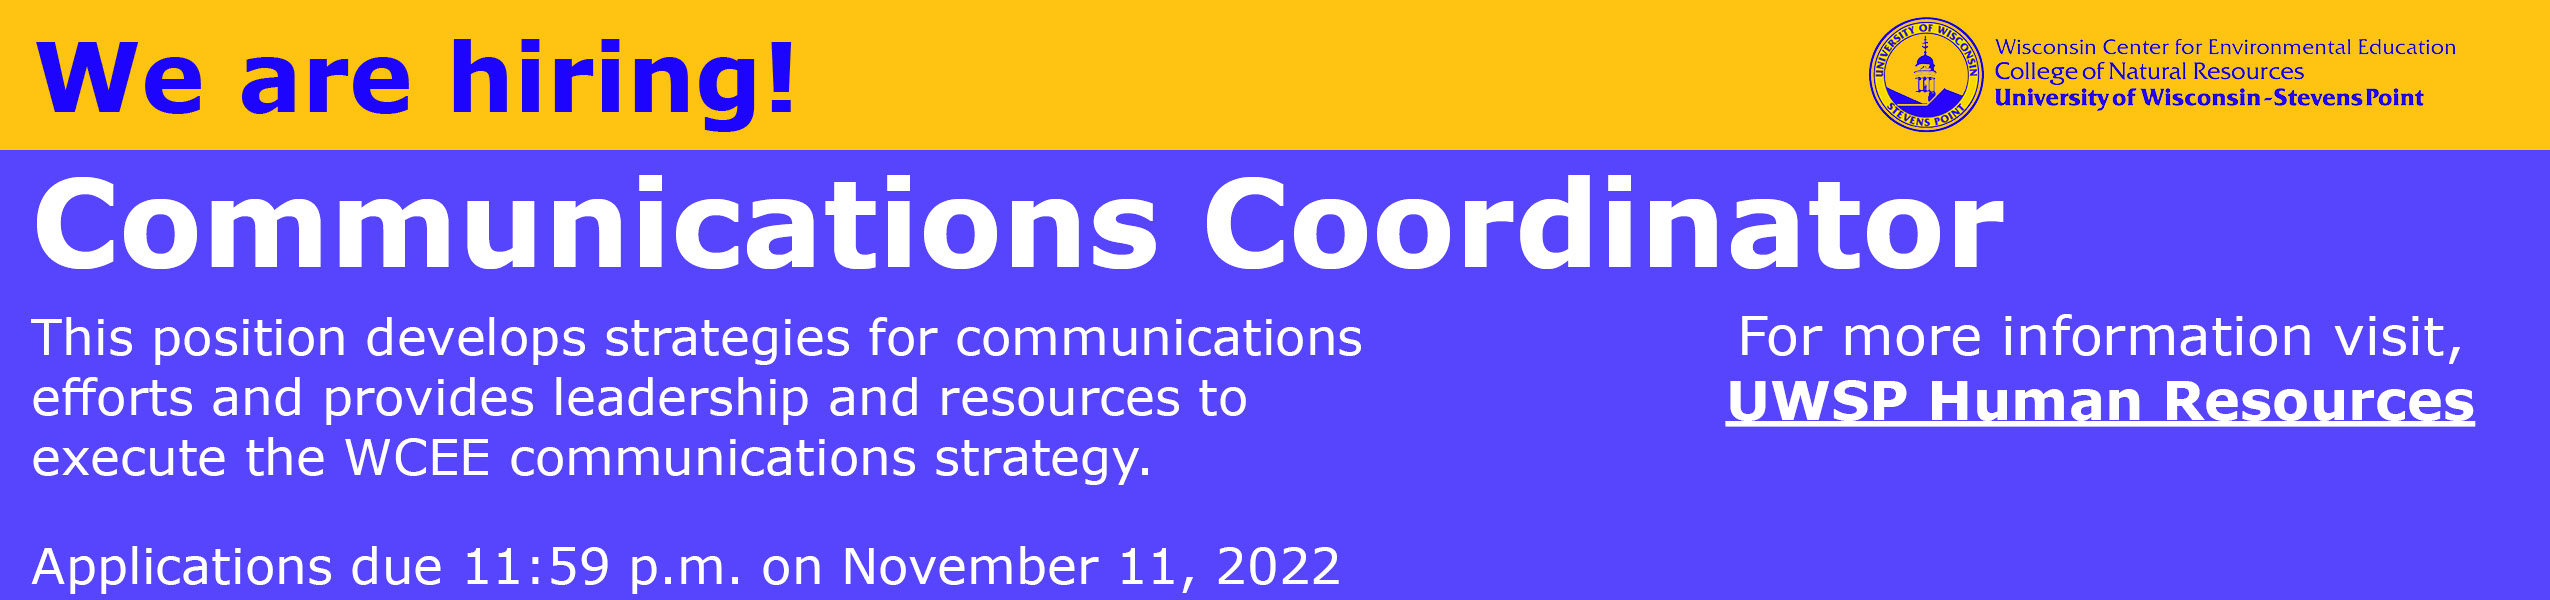 Communications Coordinator-2022.jpg